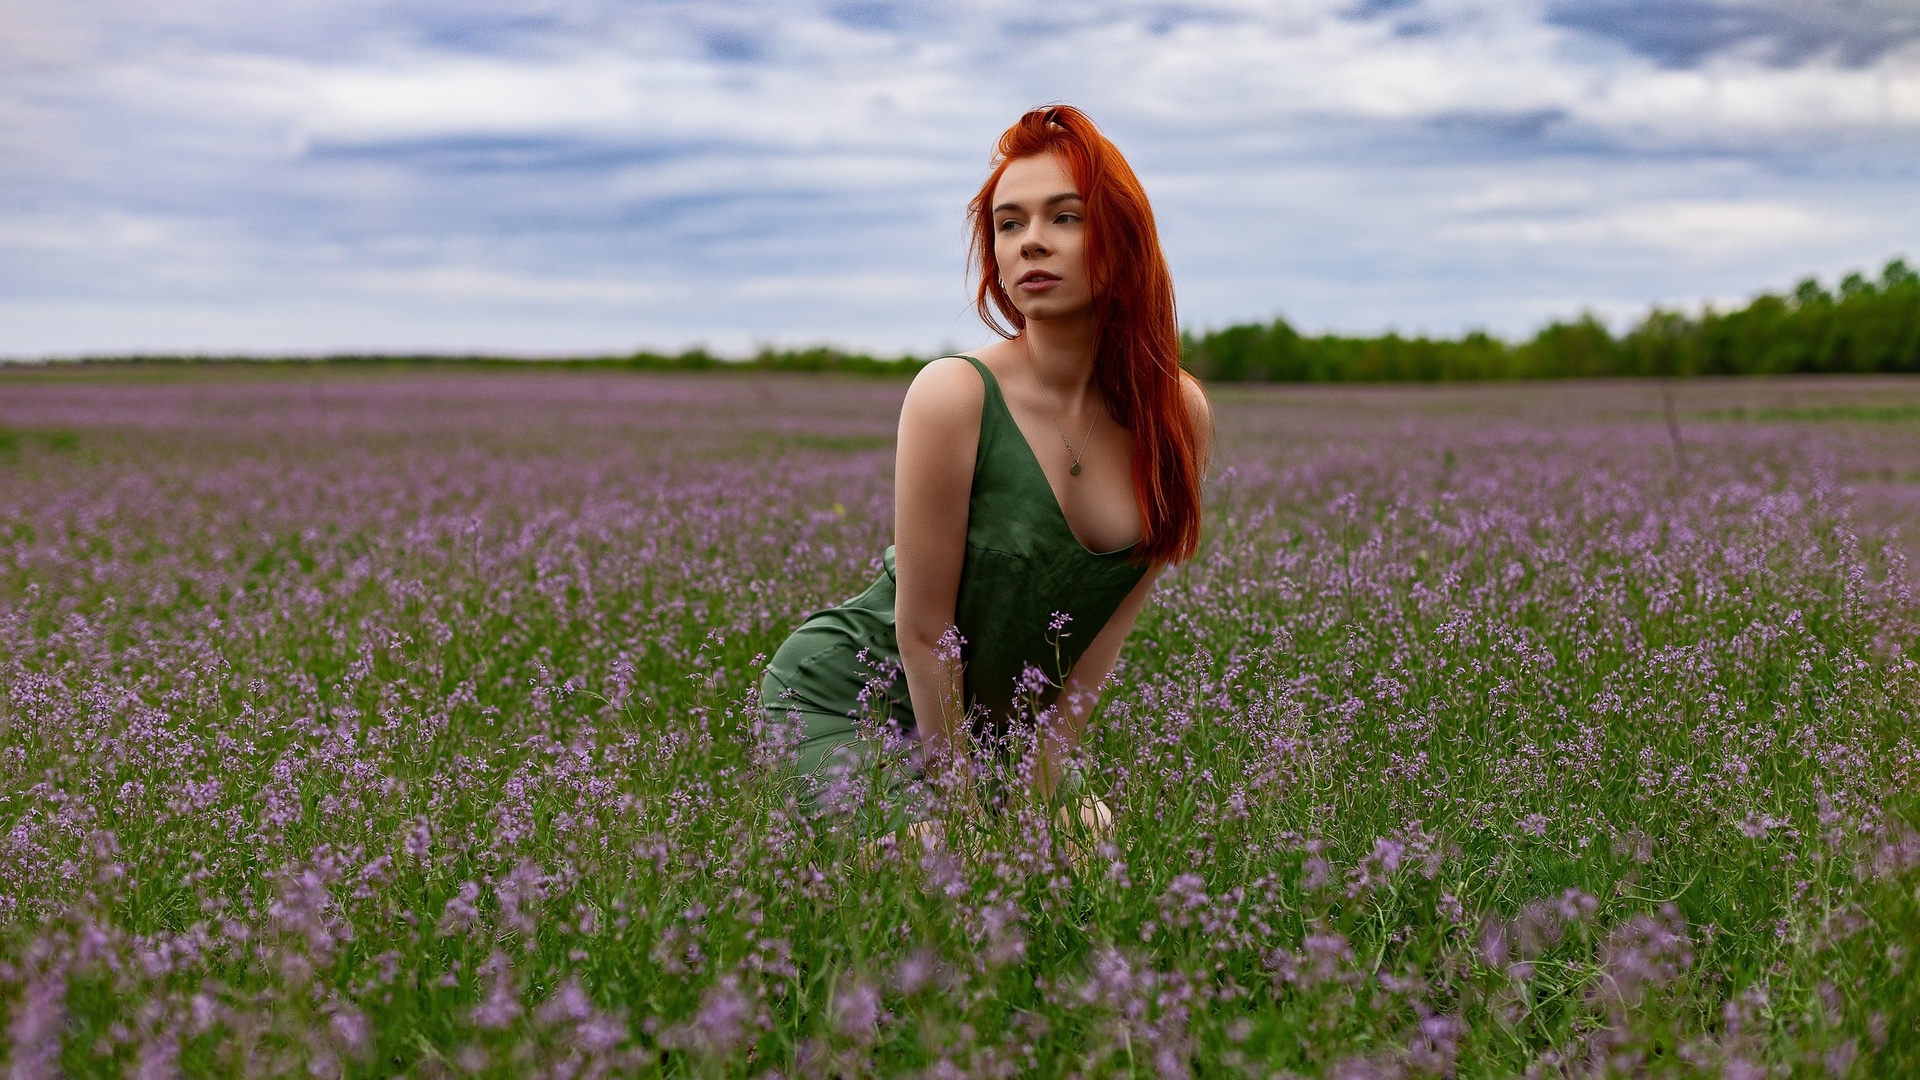 redhead, model, women, nature, green dress, neckline, flowers, grass, sky, clouds, necklace, trees, women outdoors